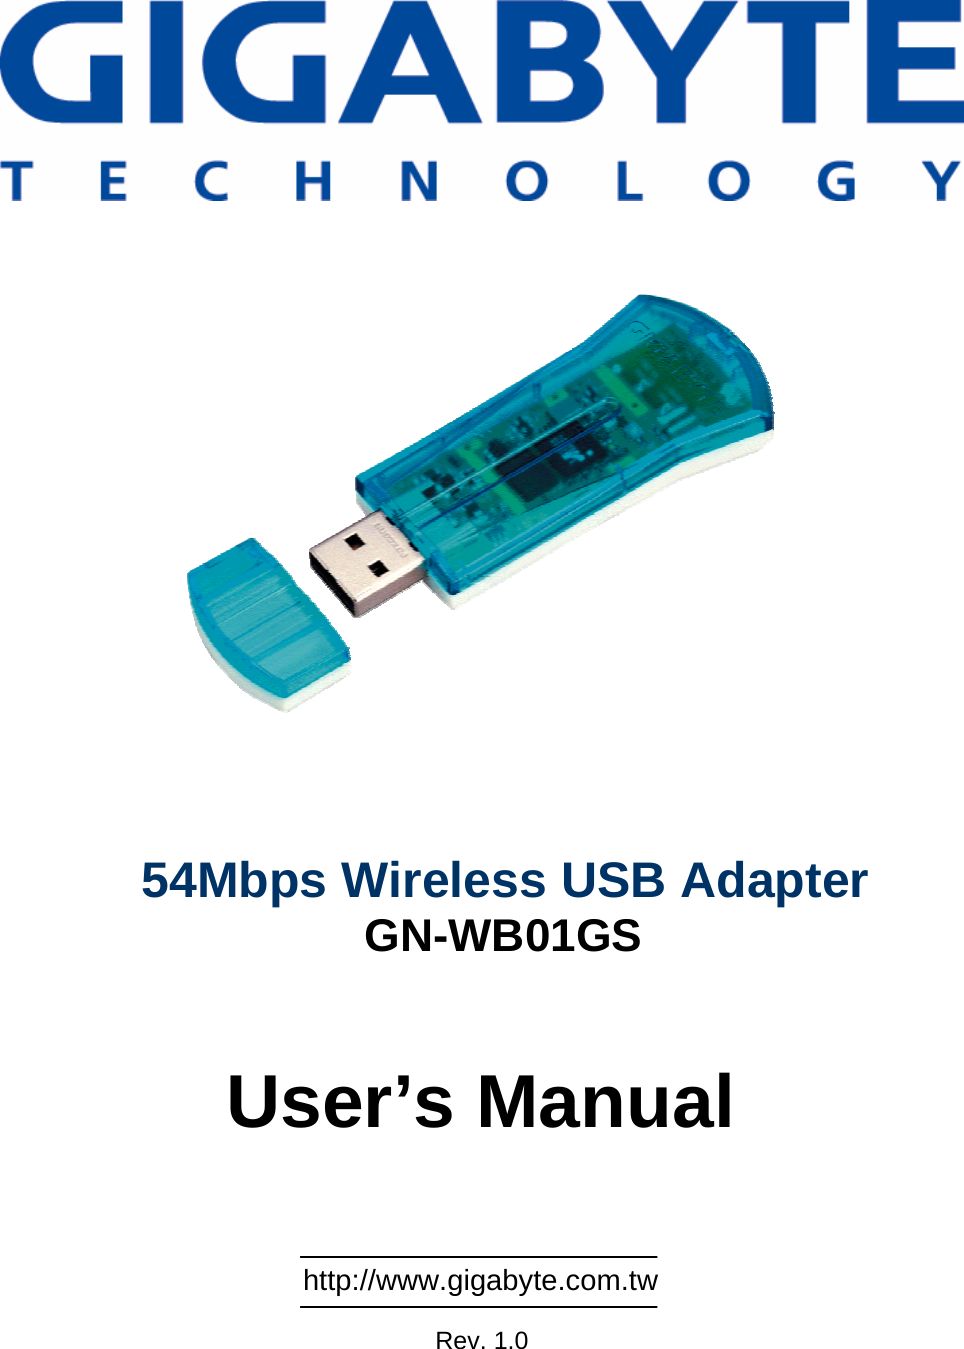                   54Mbps Wireless USB Adapter GN-WB01GS   User’s Manual      http://www.gigabyte.com.tw  Rev. 1.0 